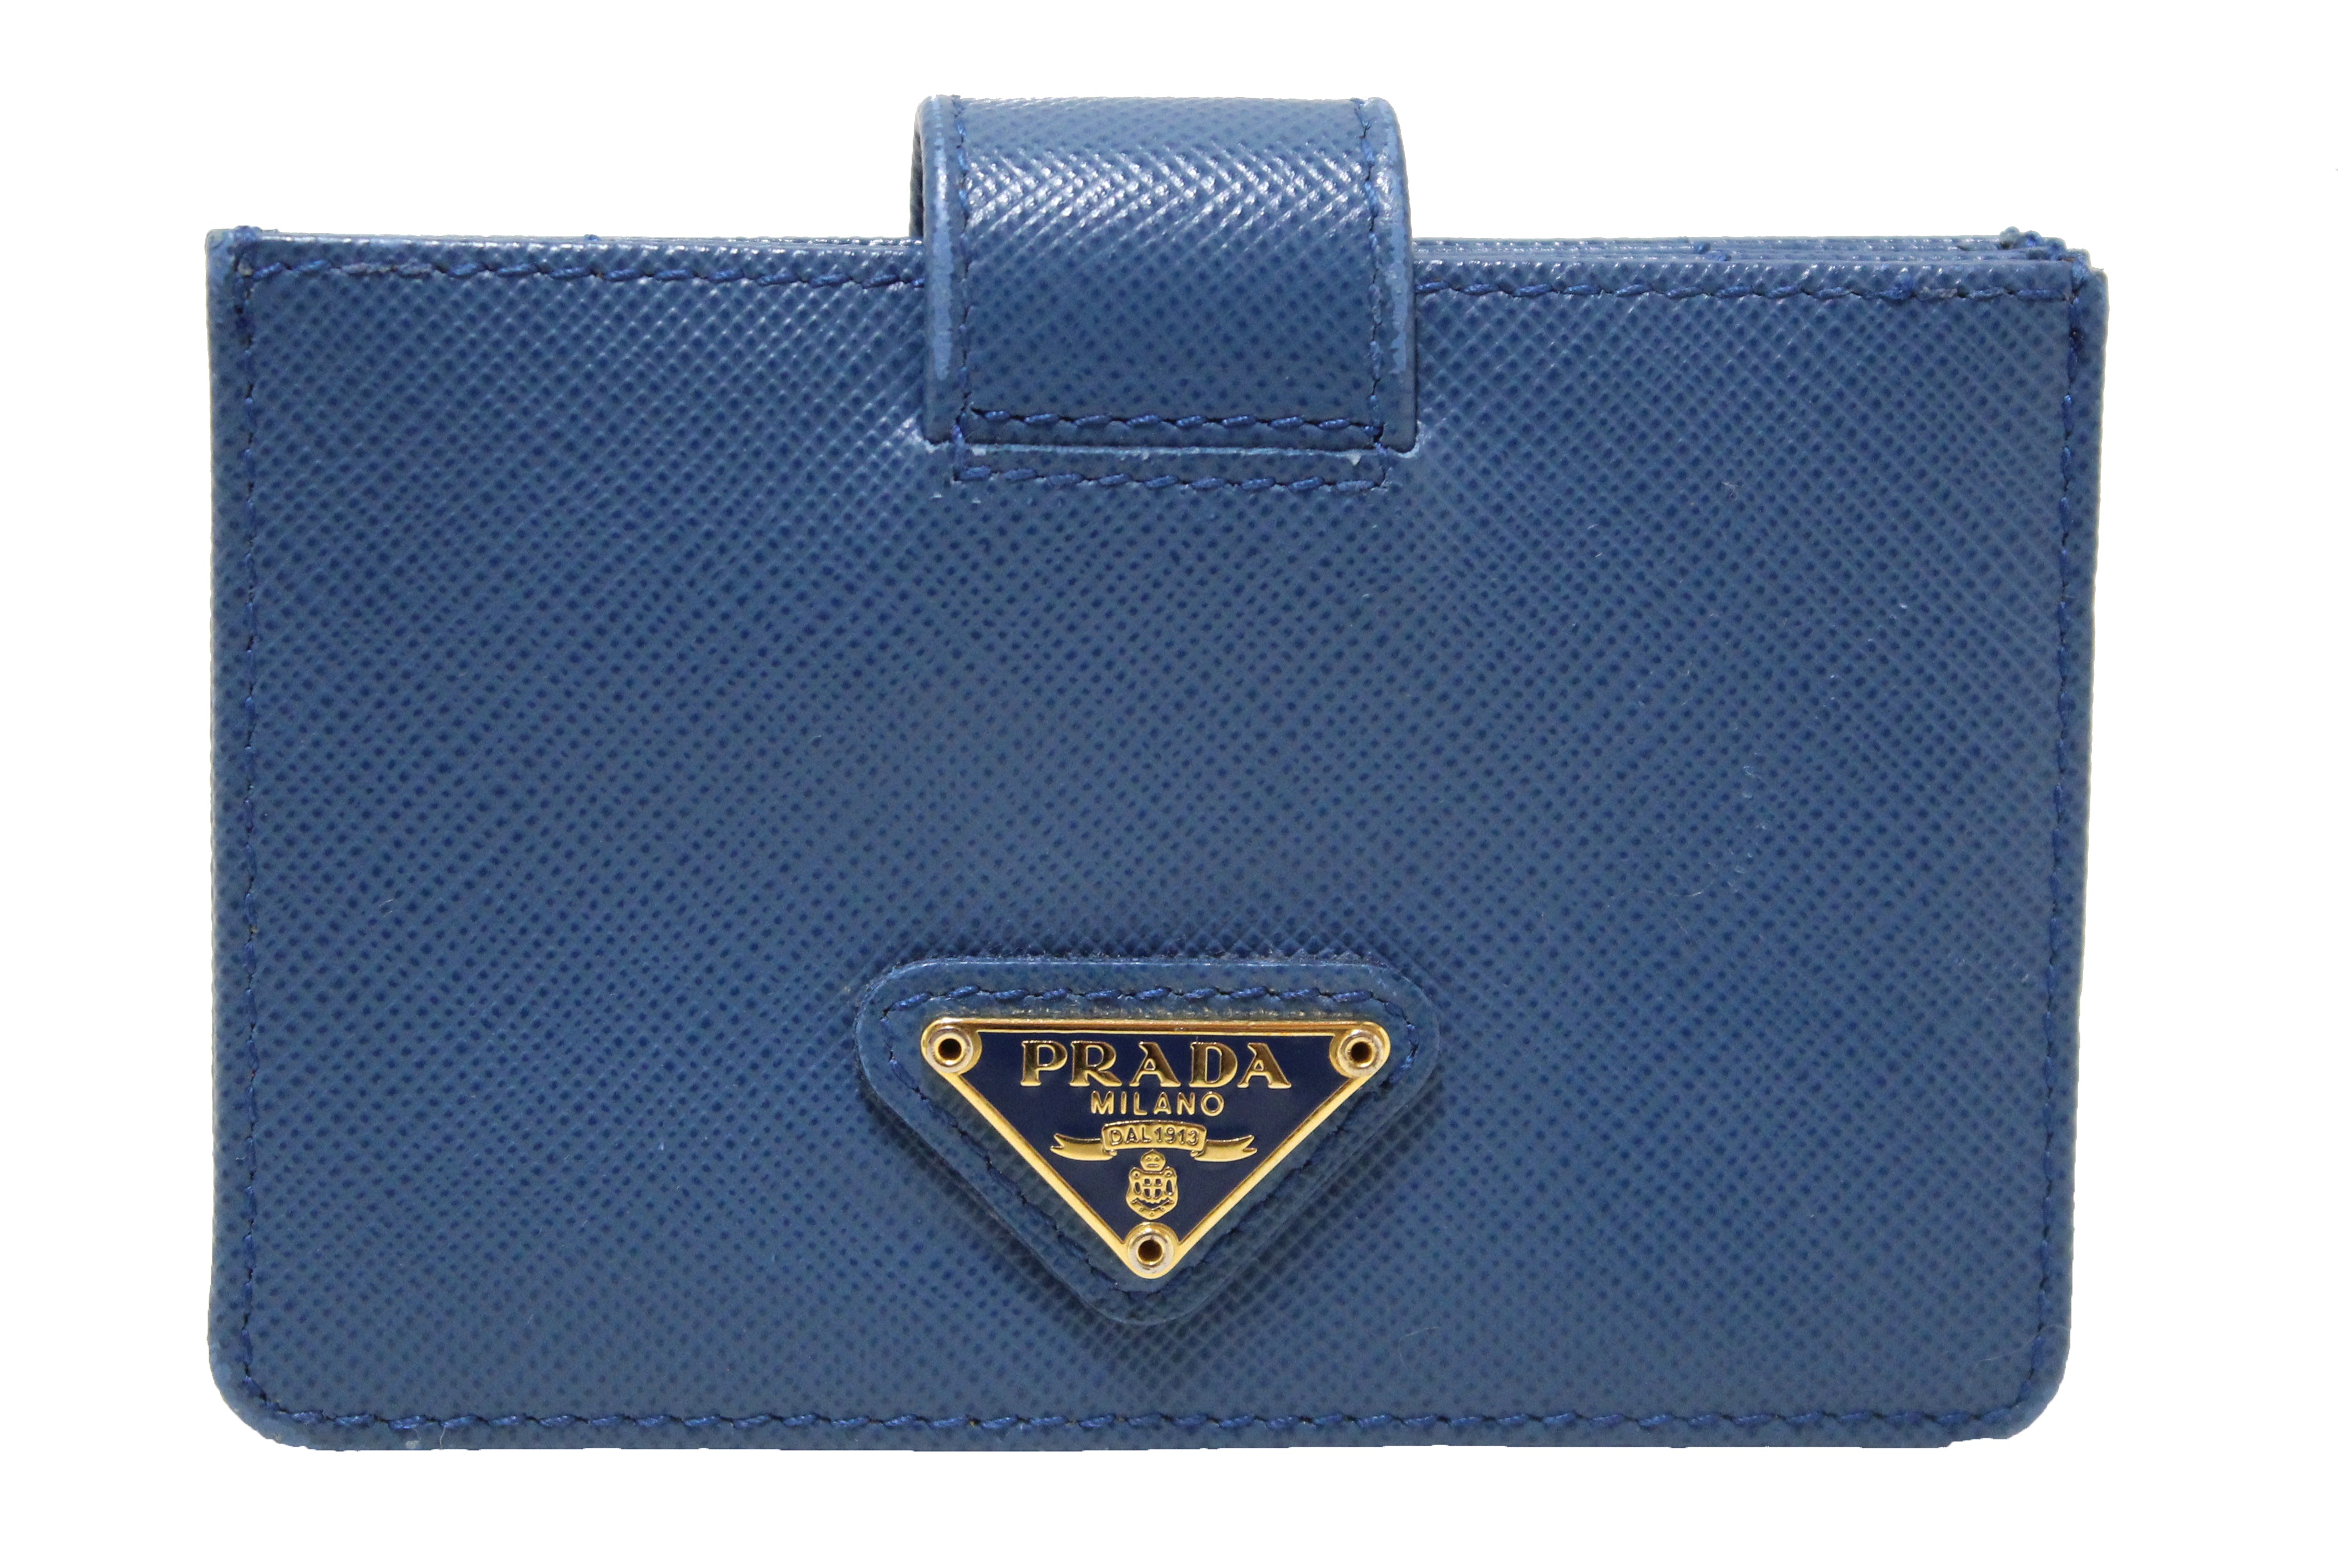 Authentic Prada Blue Saffiano Leather Accordion Card Case Holder 1MC211